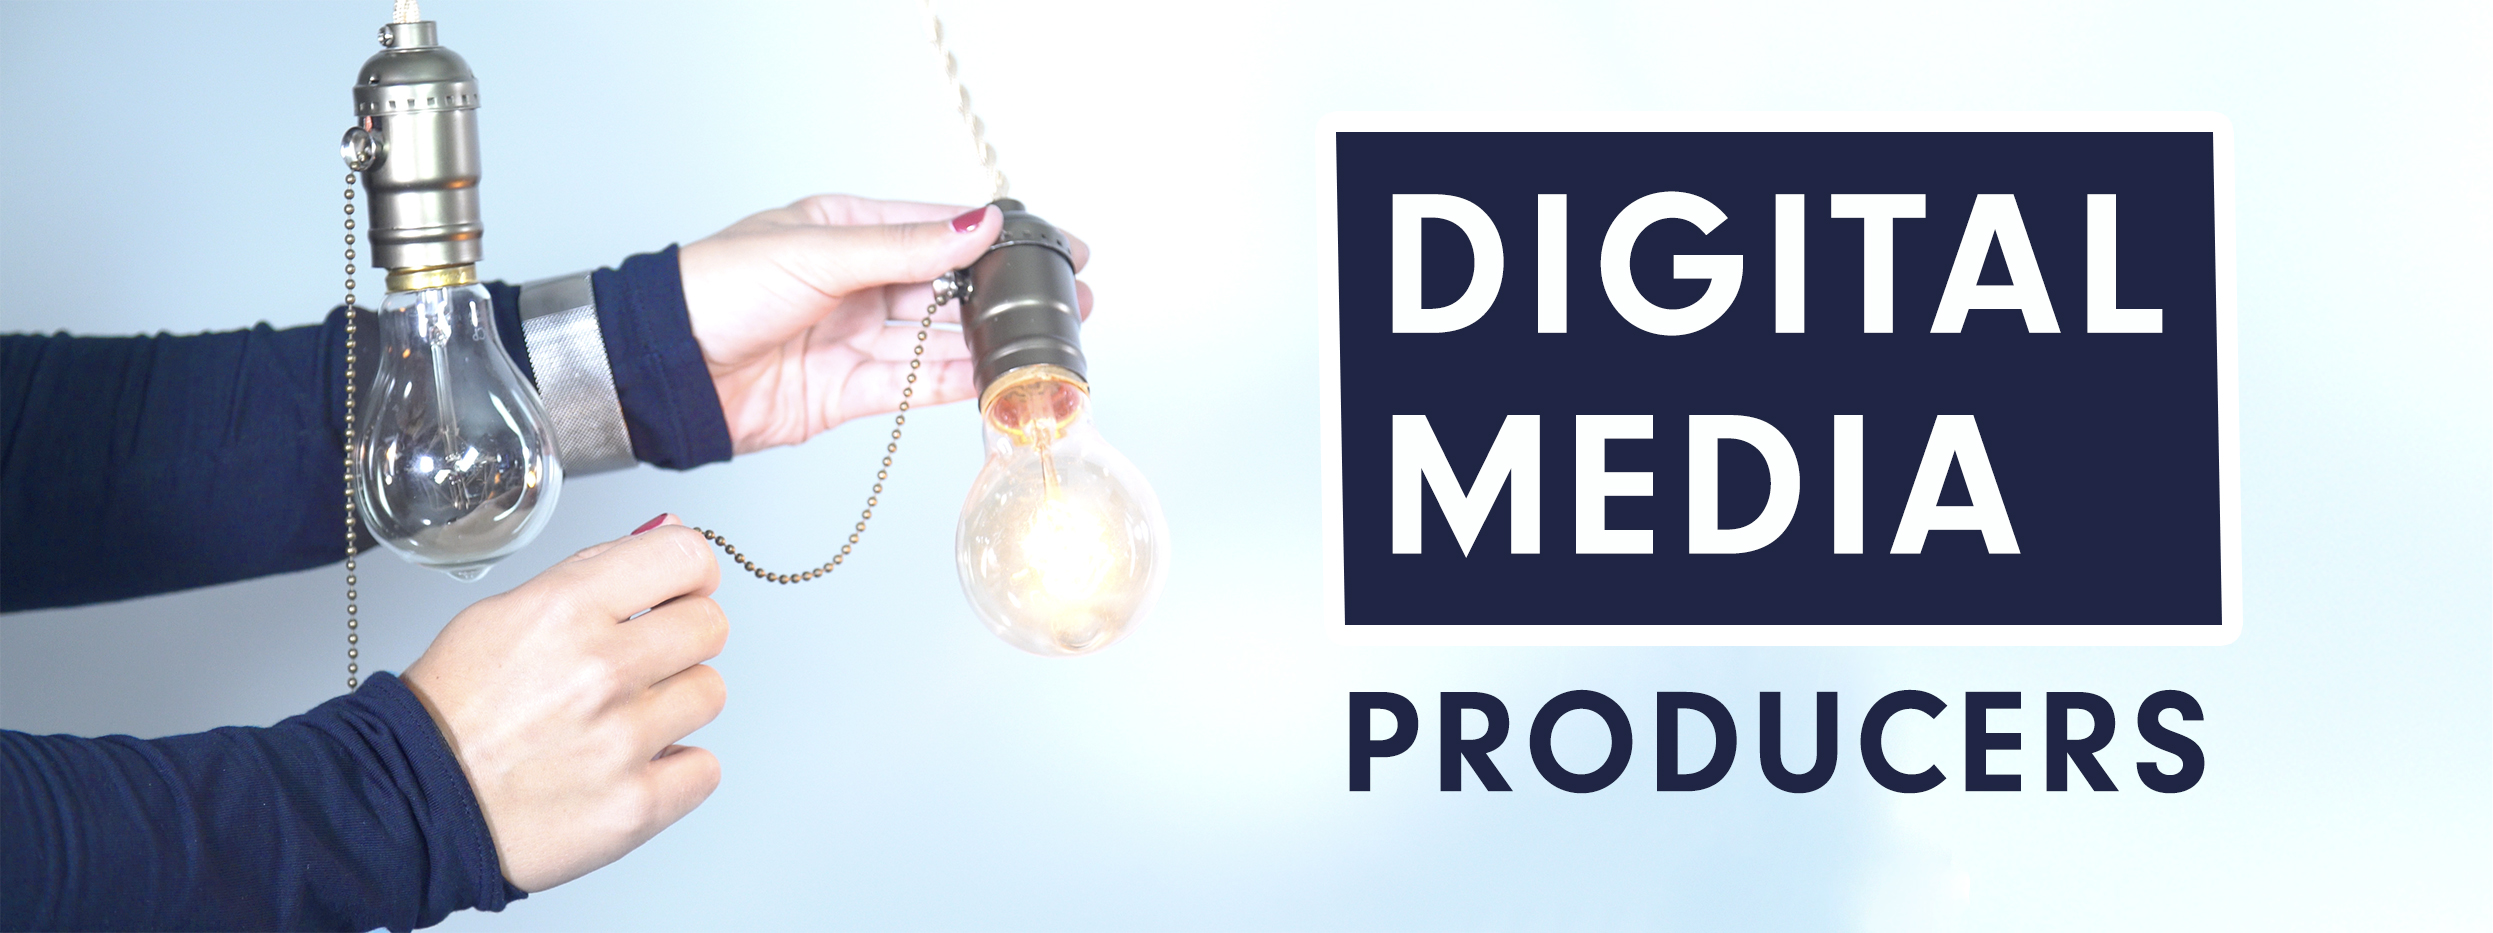 Digital Media Producers banner